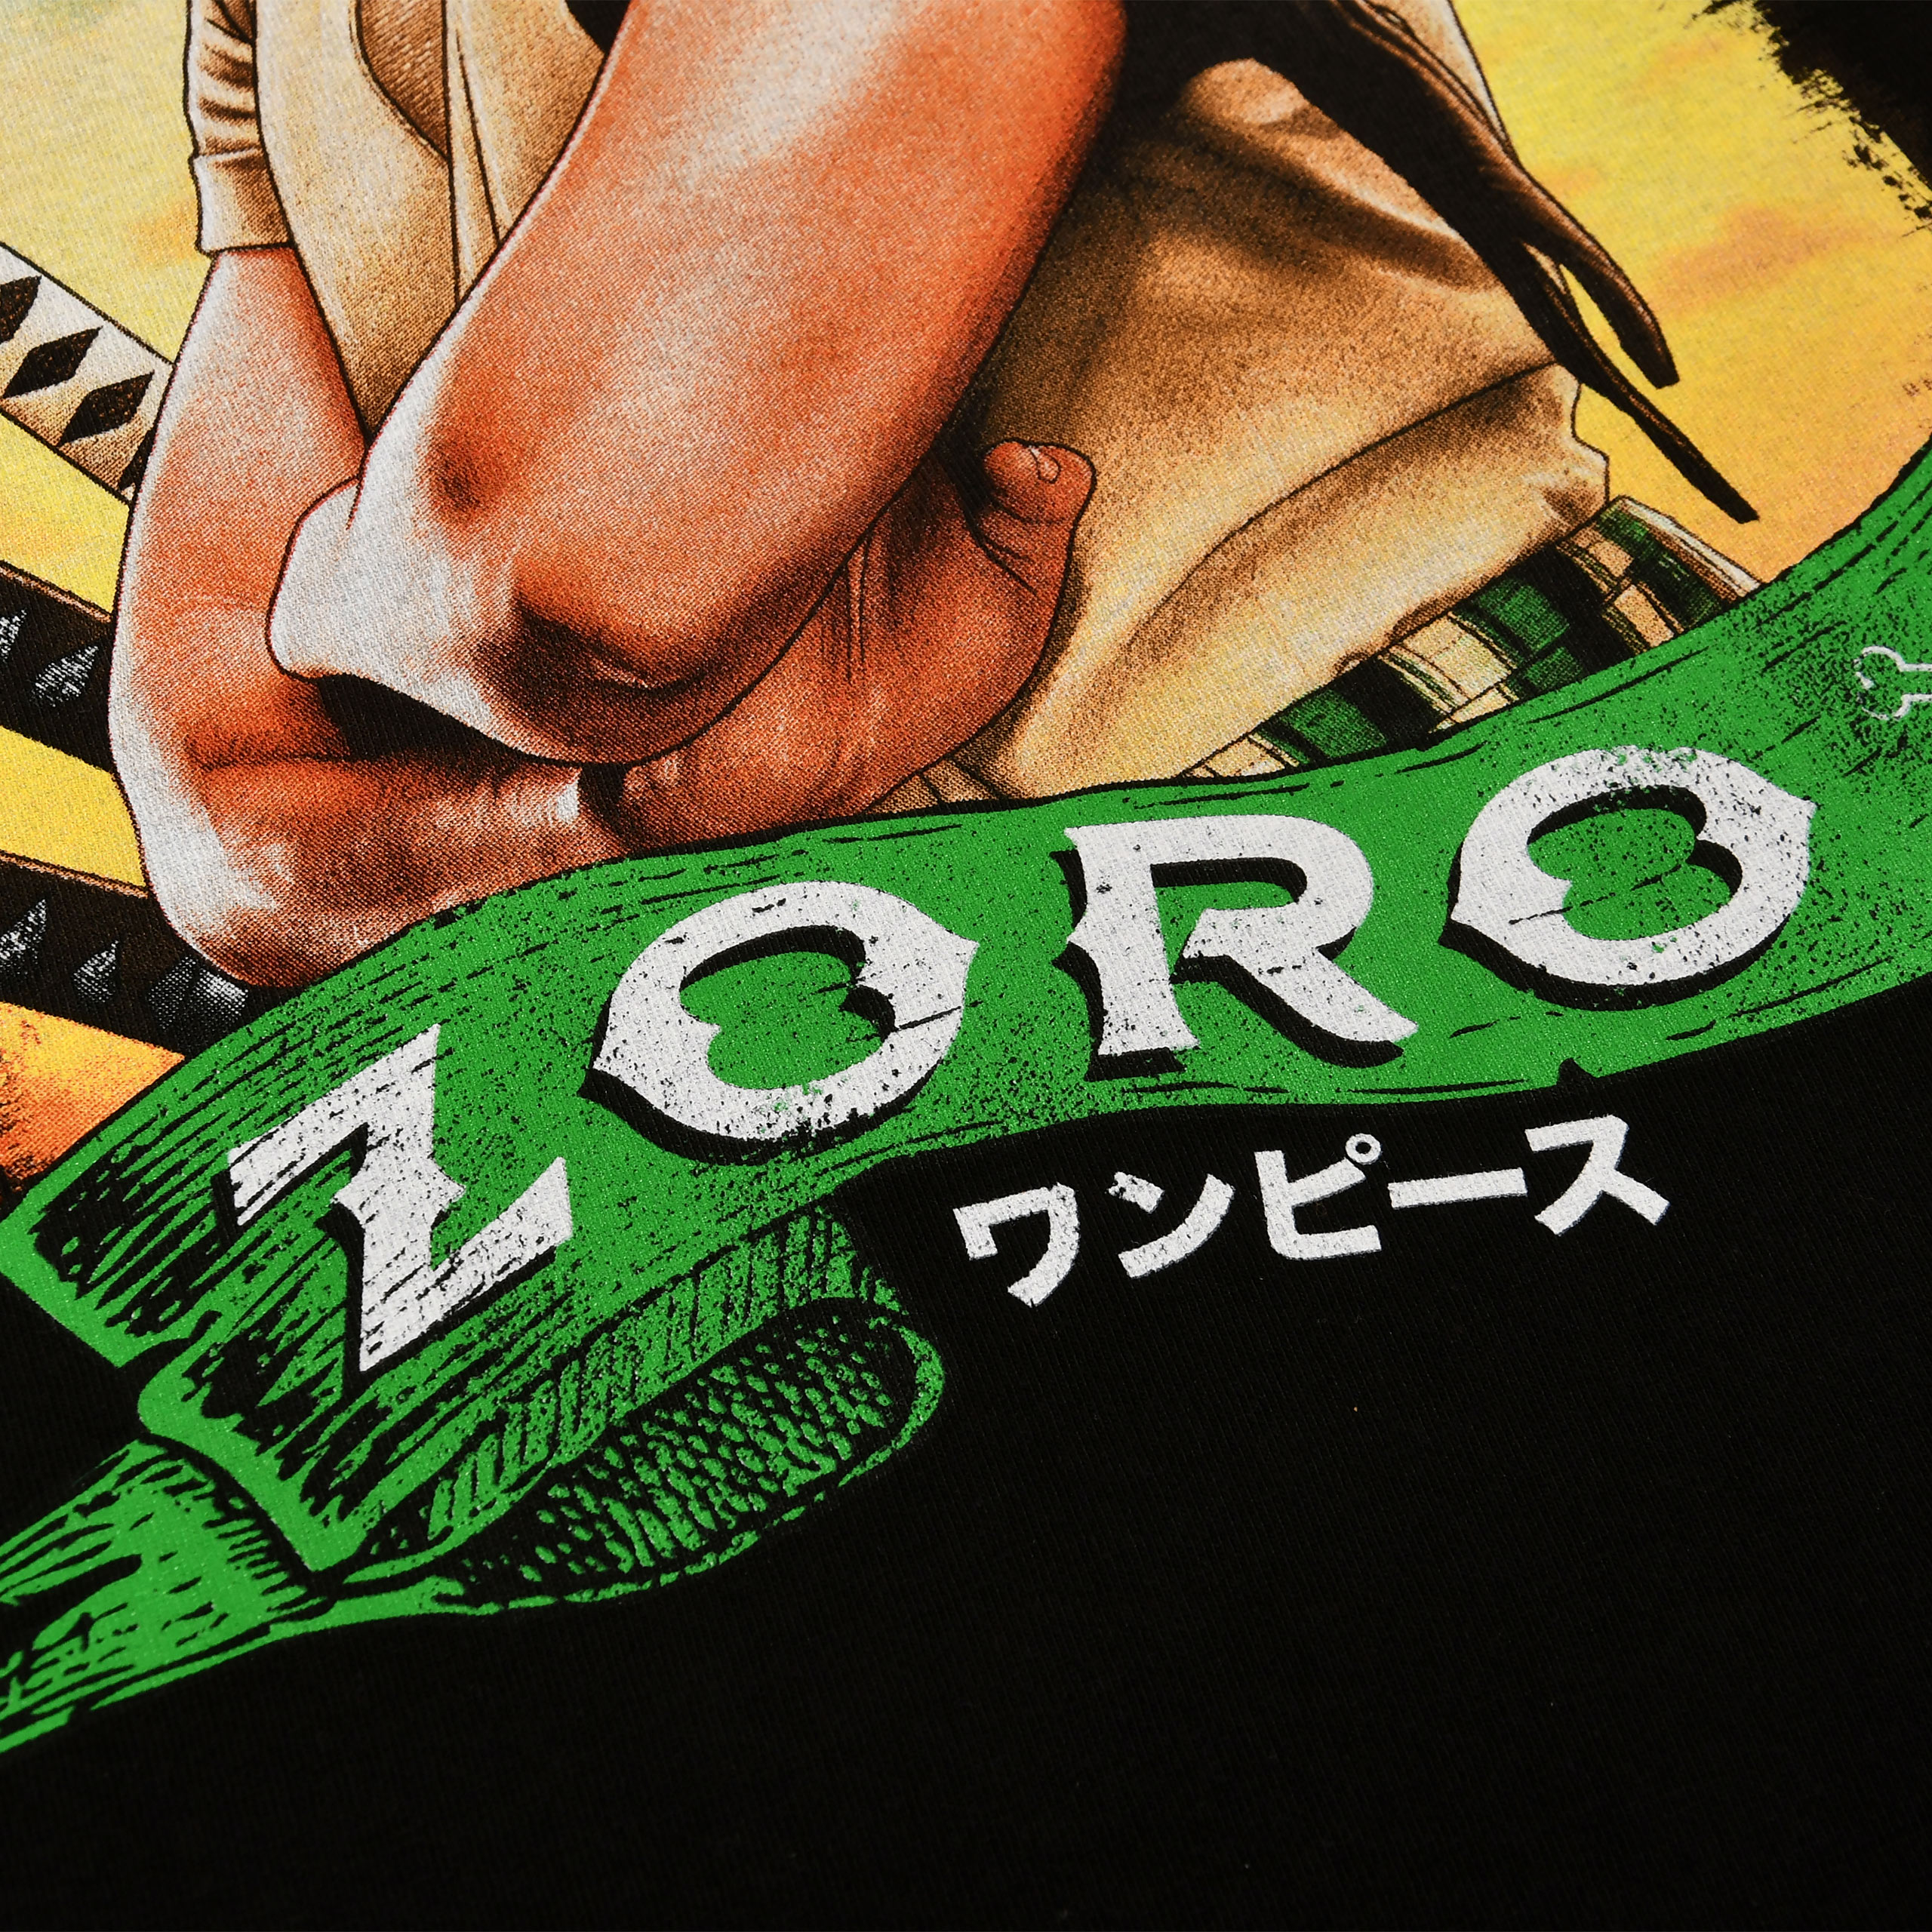 Zoro T-Shirt Black - One Piece